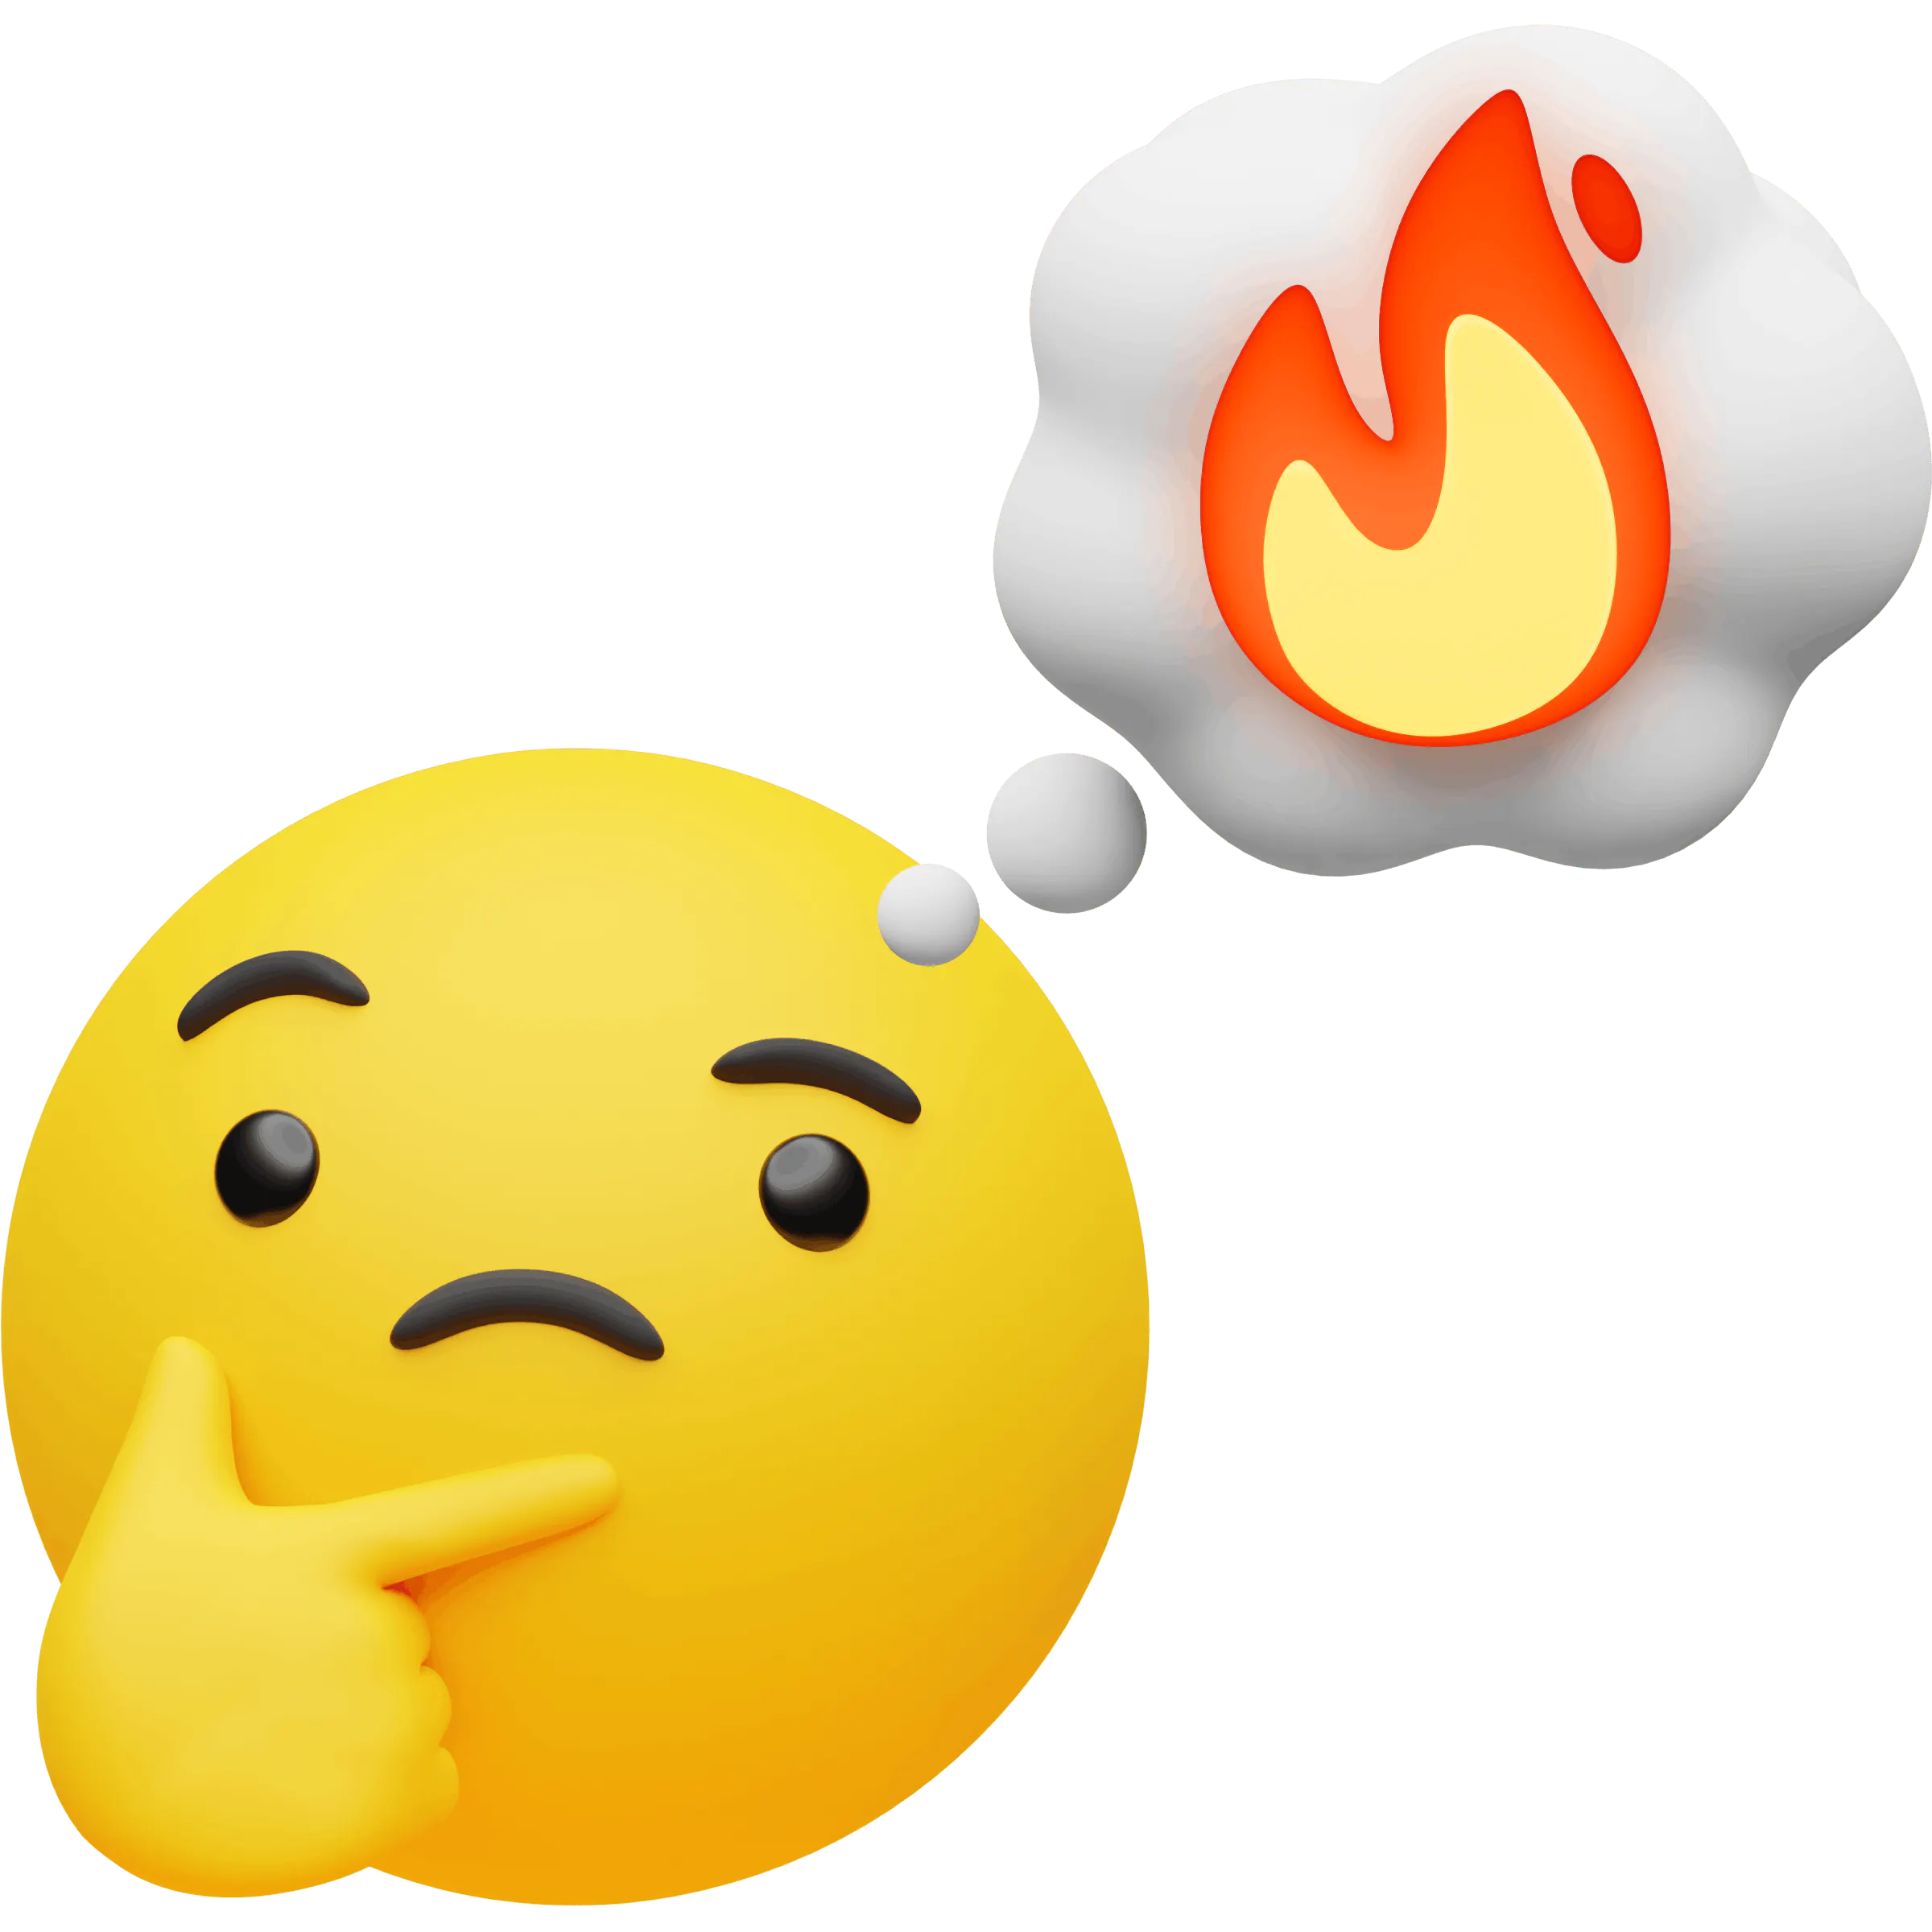 Emoji thinking about blazing fast performance optimisation using Next.js and Static Site Generation